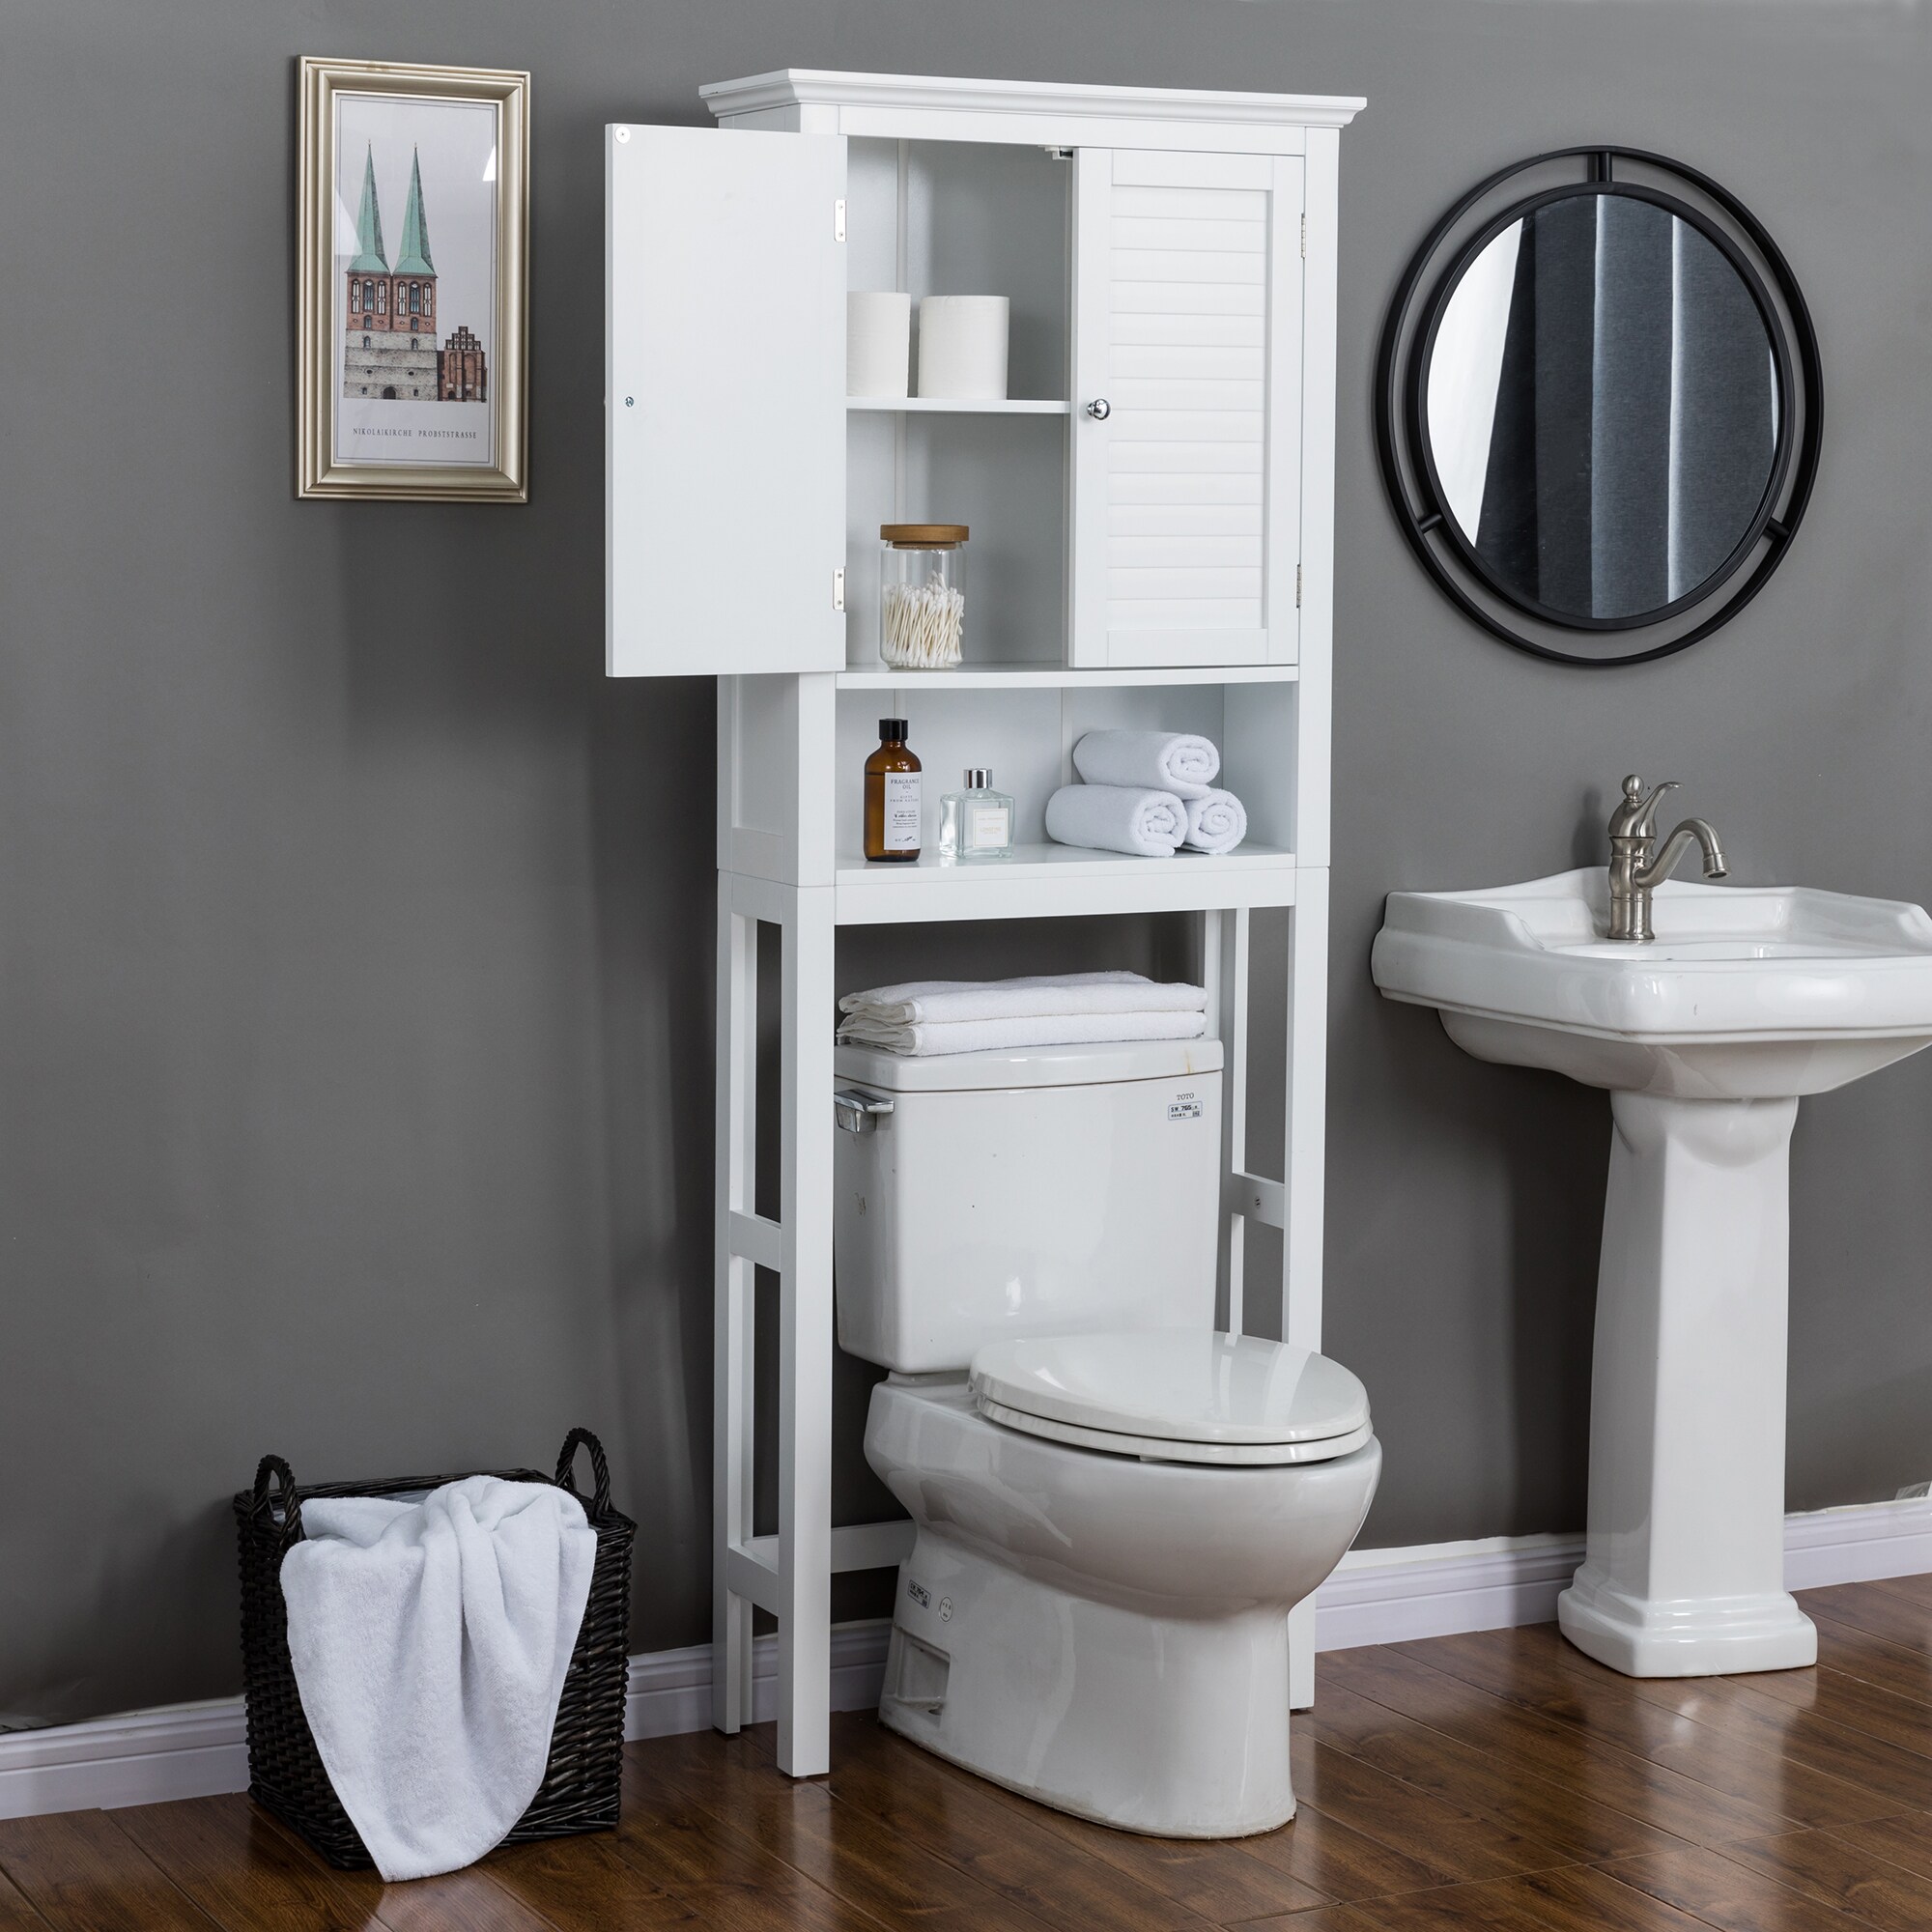 Henf Over The Toilet Storage Cabinet, Free Standing Bathroom Organizer  Shelf Space Saver Toilet Storage Stands, Espresso